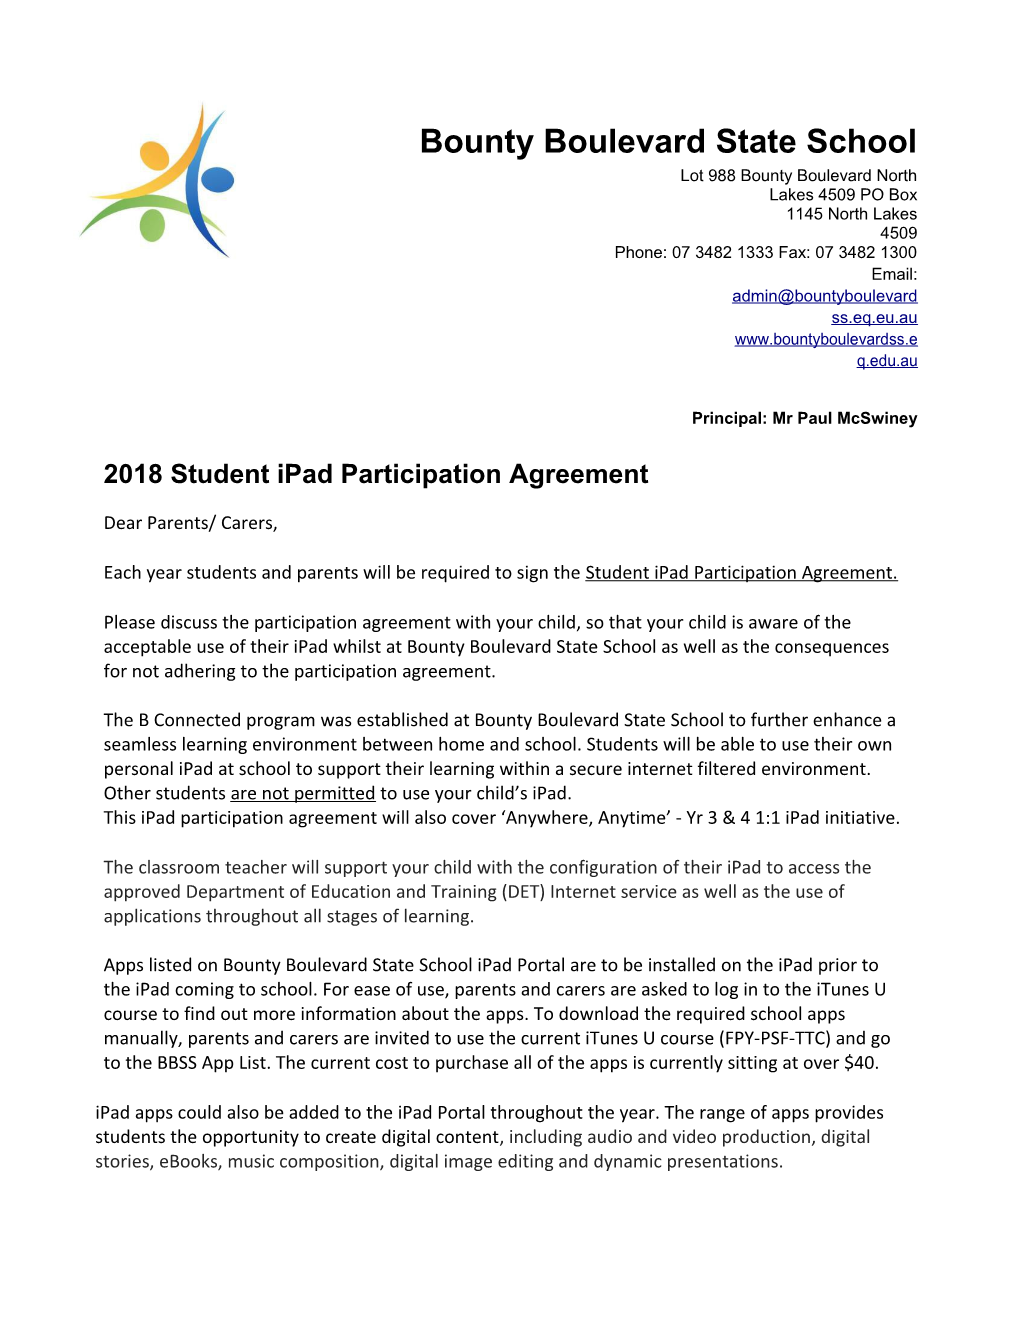 Student Ipad Participation Agreement 2018 Prep1256